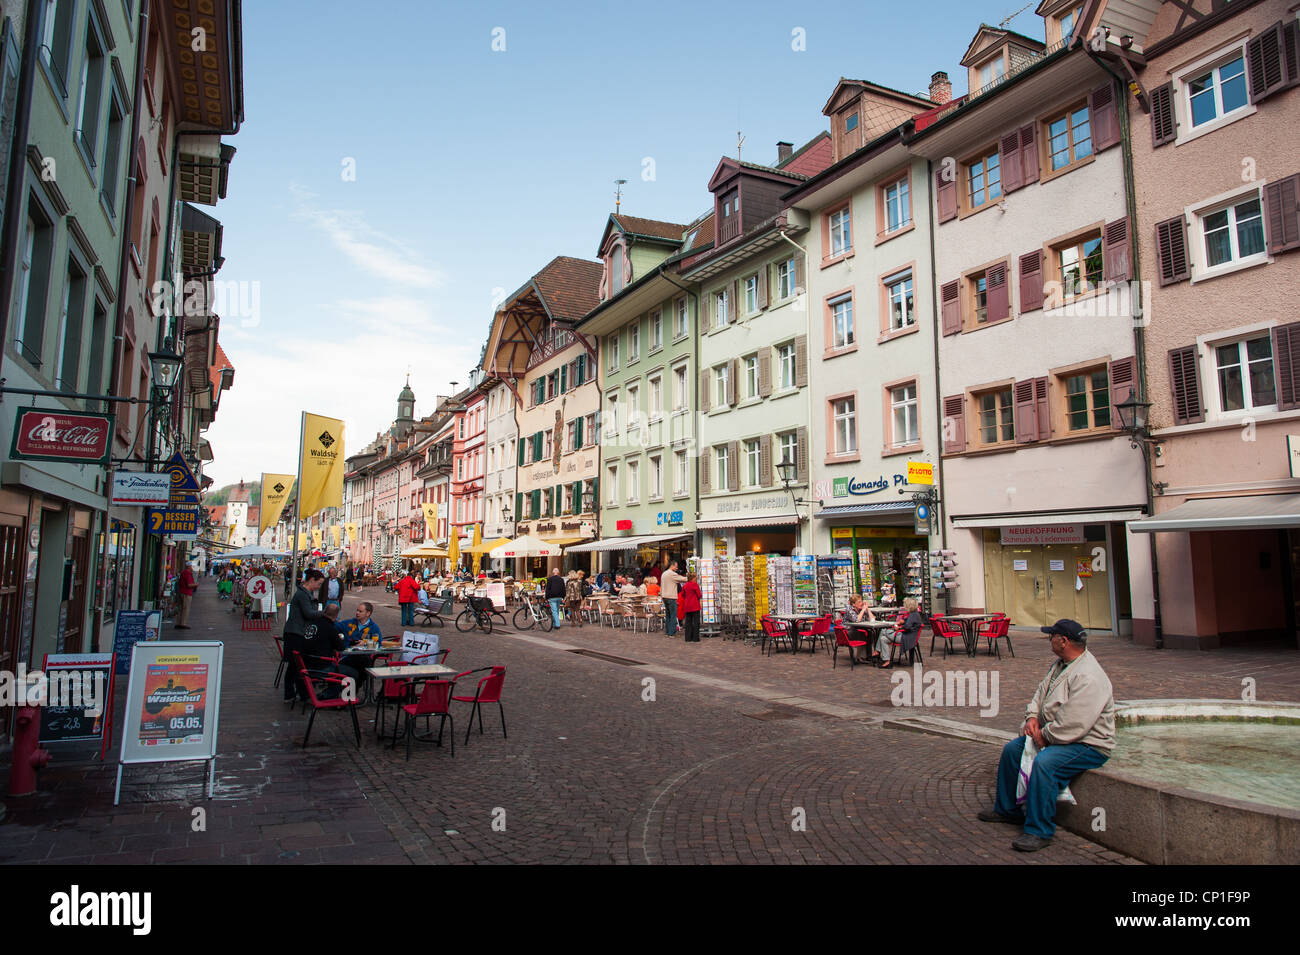 Historic city center of the town Waldshut, Germany, 2012 Stock Photo